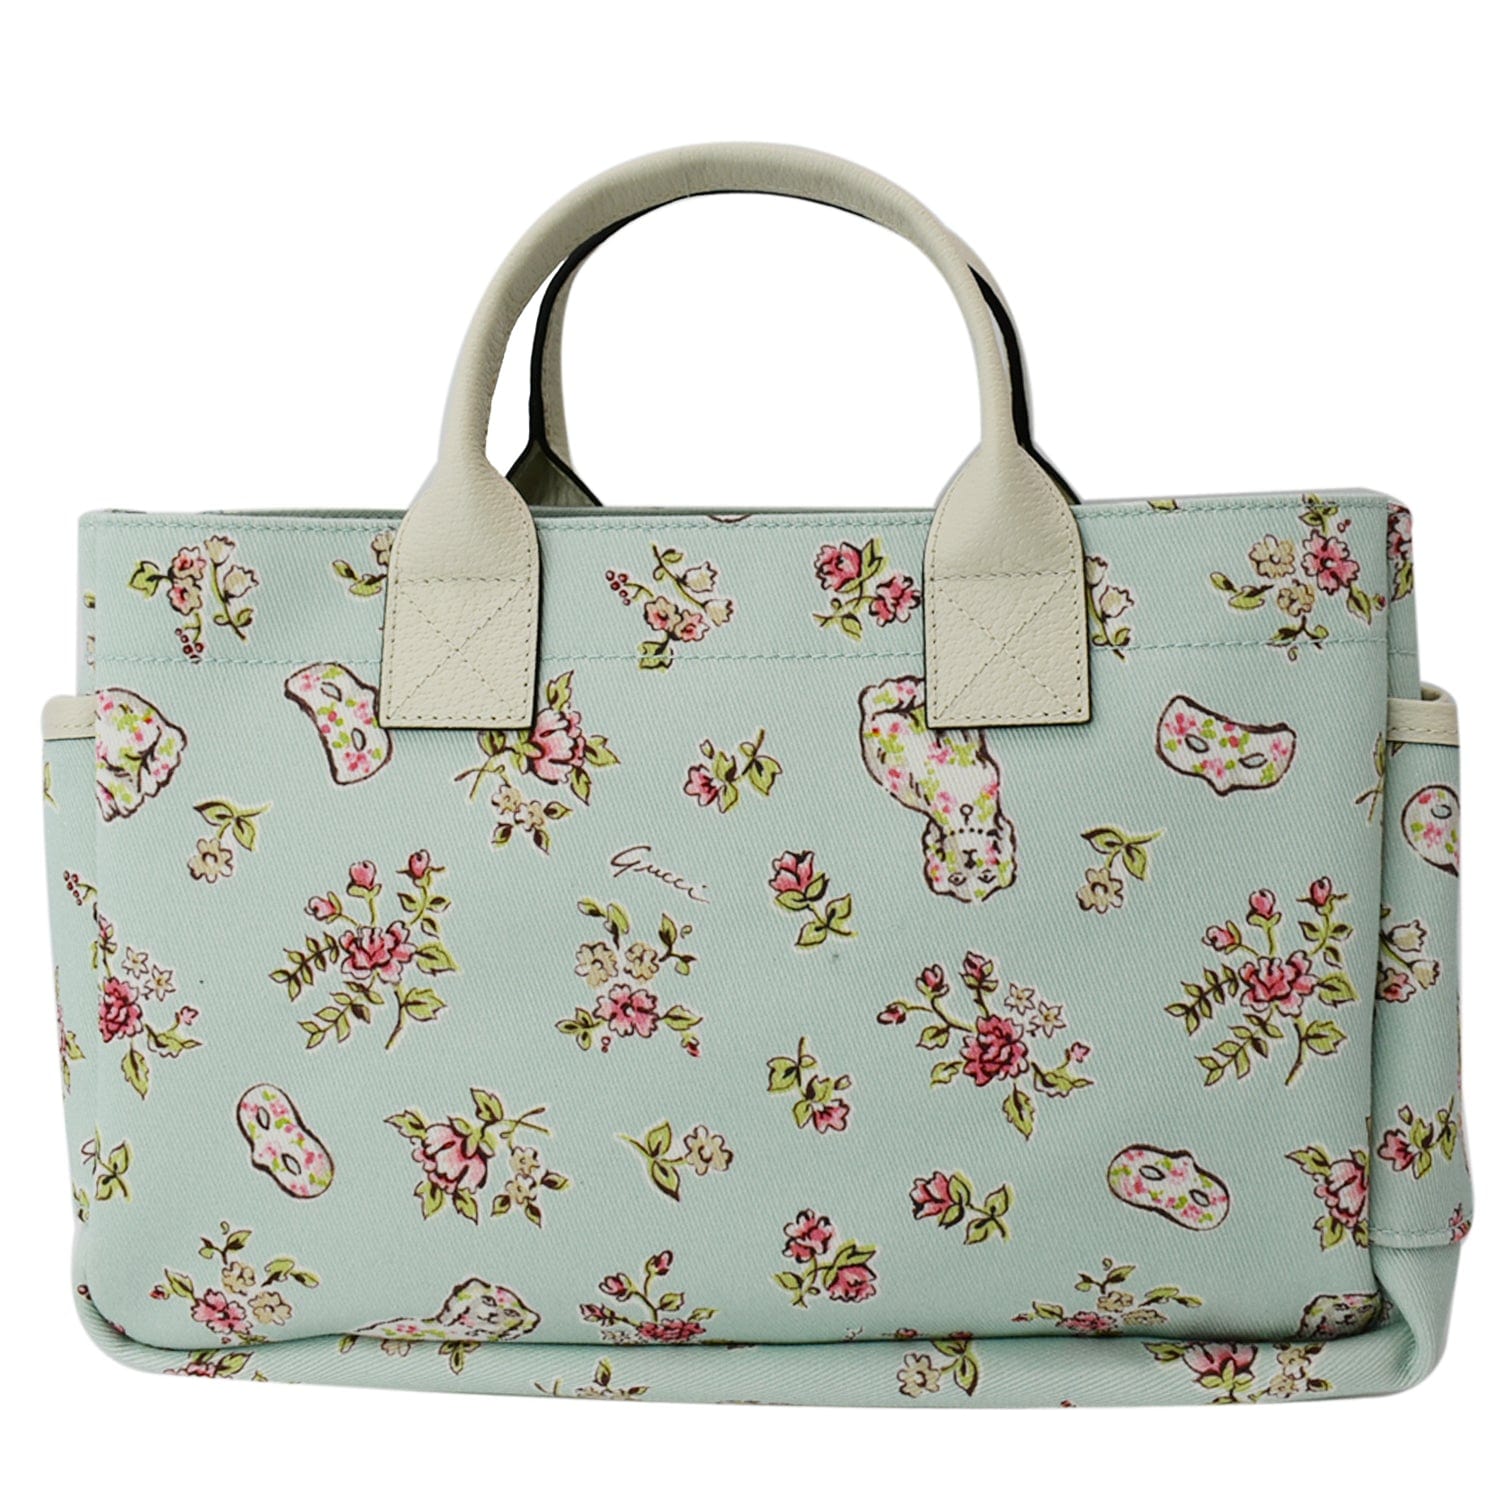 Gucci, Bags, Authentic Gucci Floral Canvas Tote Bag